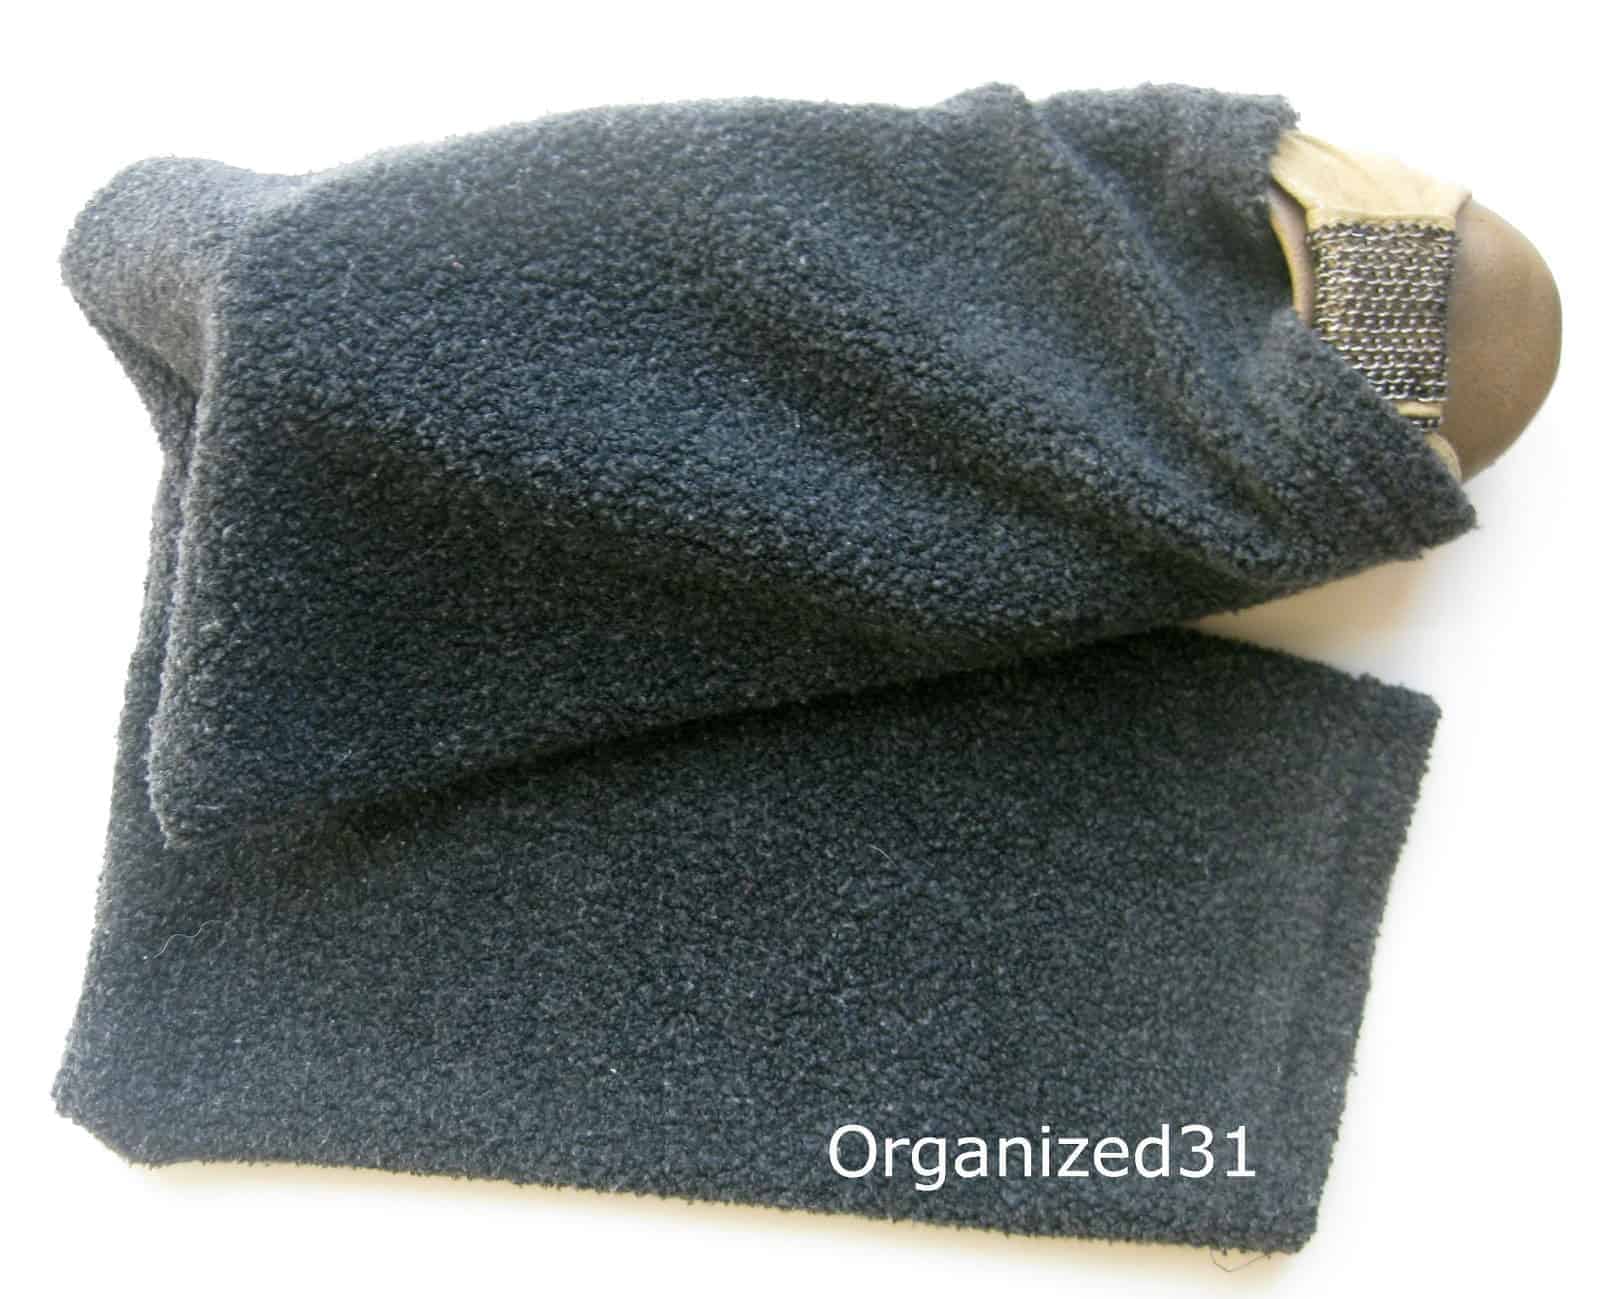 Repurposed Sweater Sleeve to Travel Shoe Bag